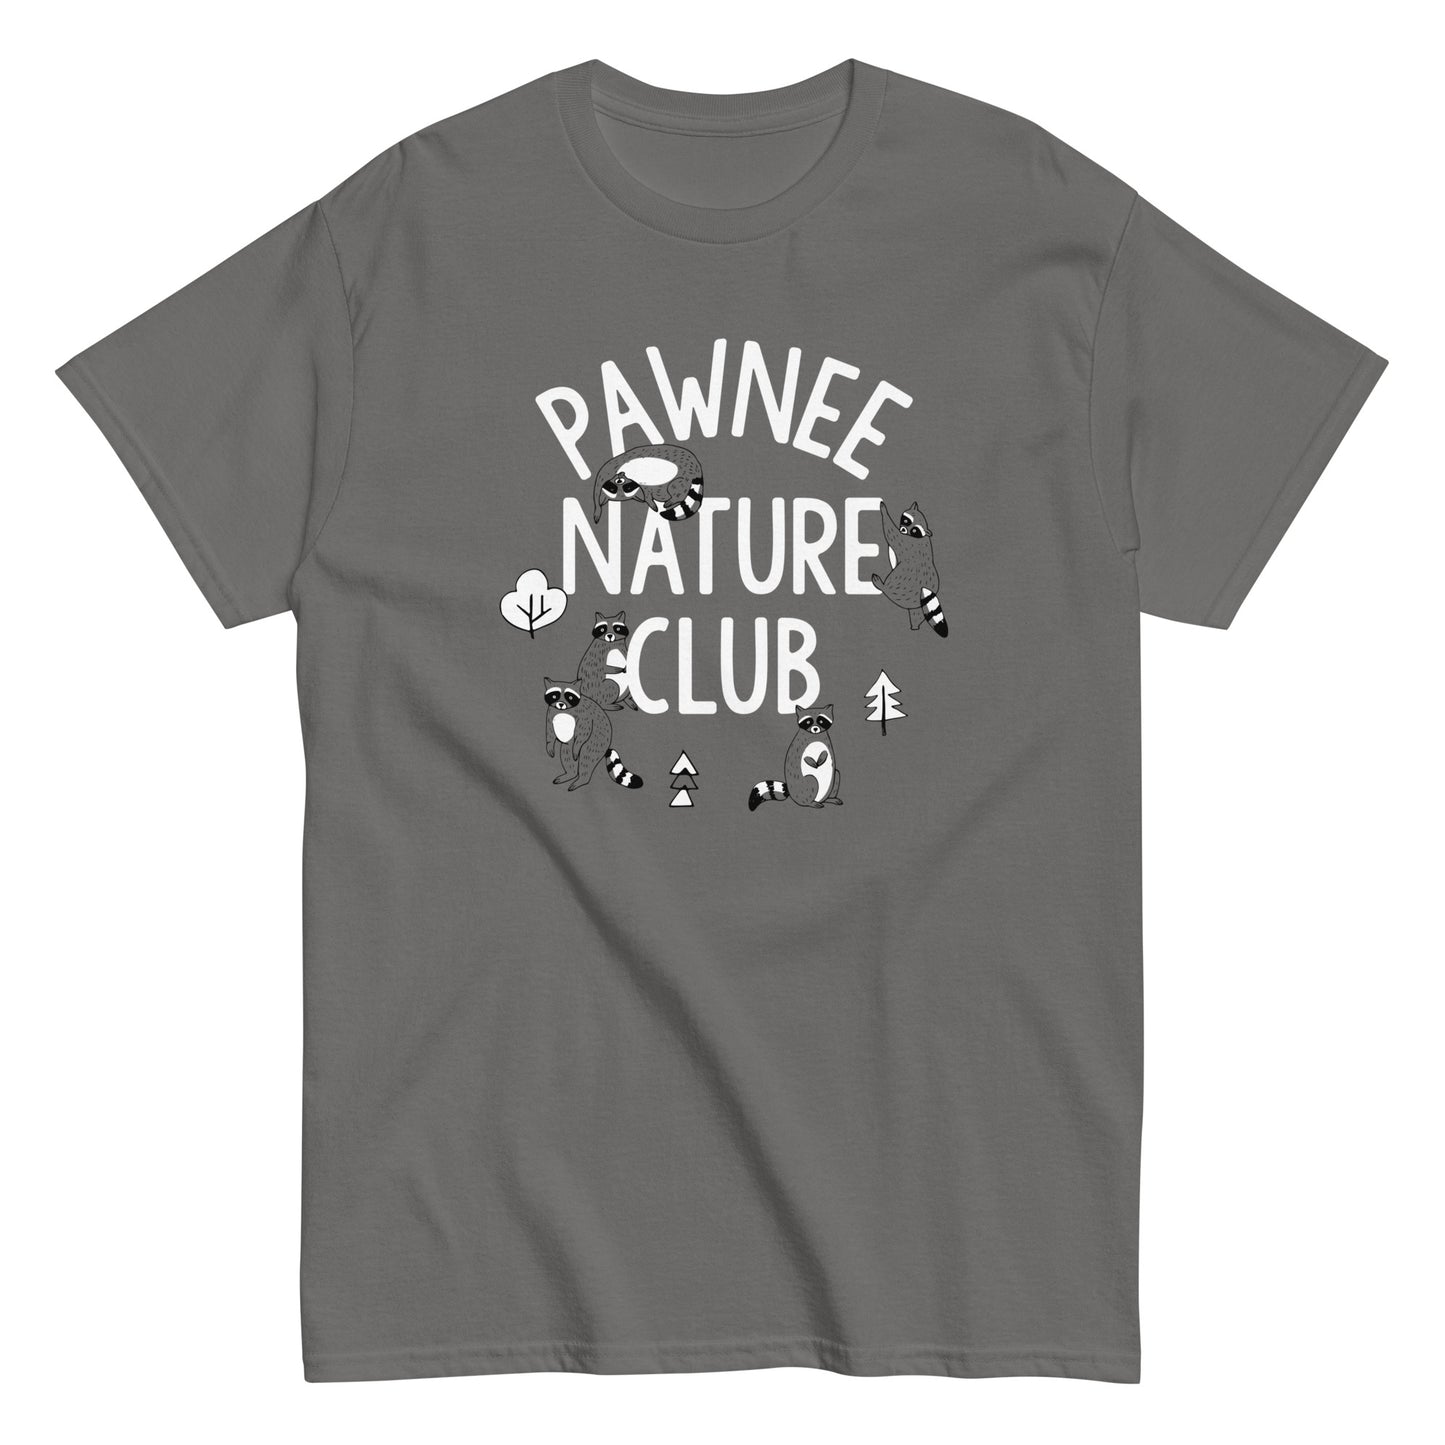 Pawnee Nature Club Men's Classic Tee